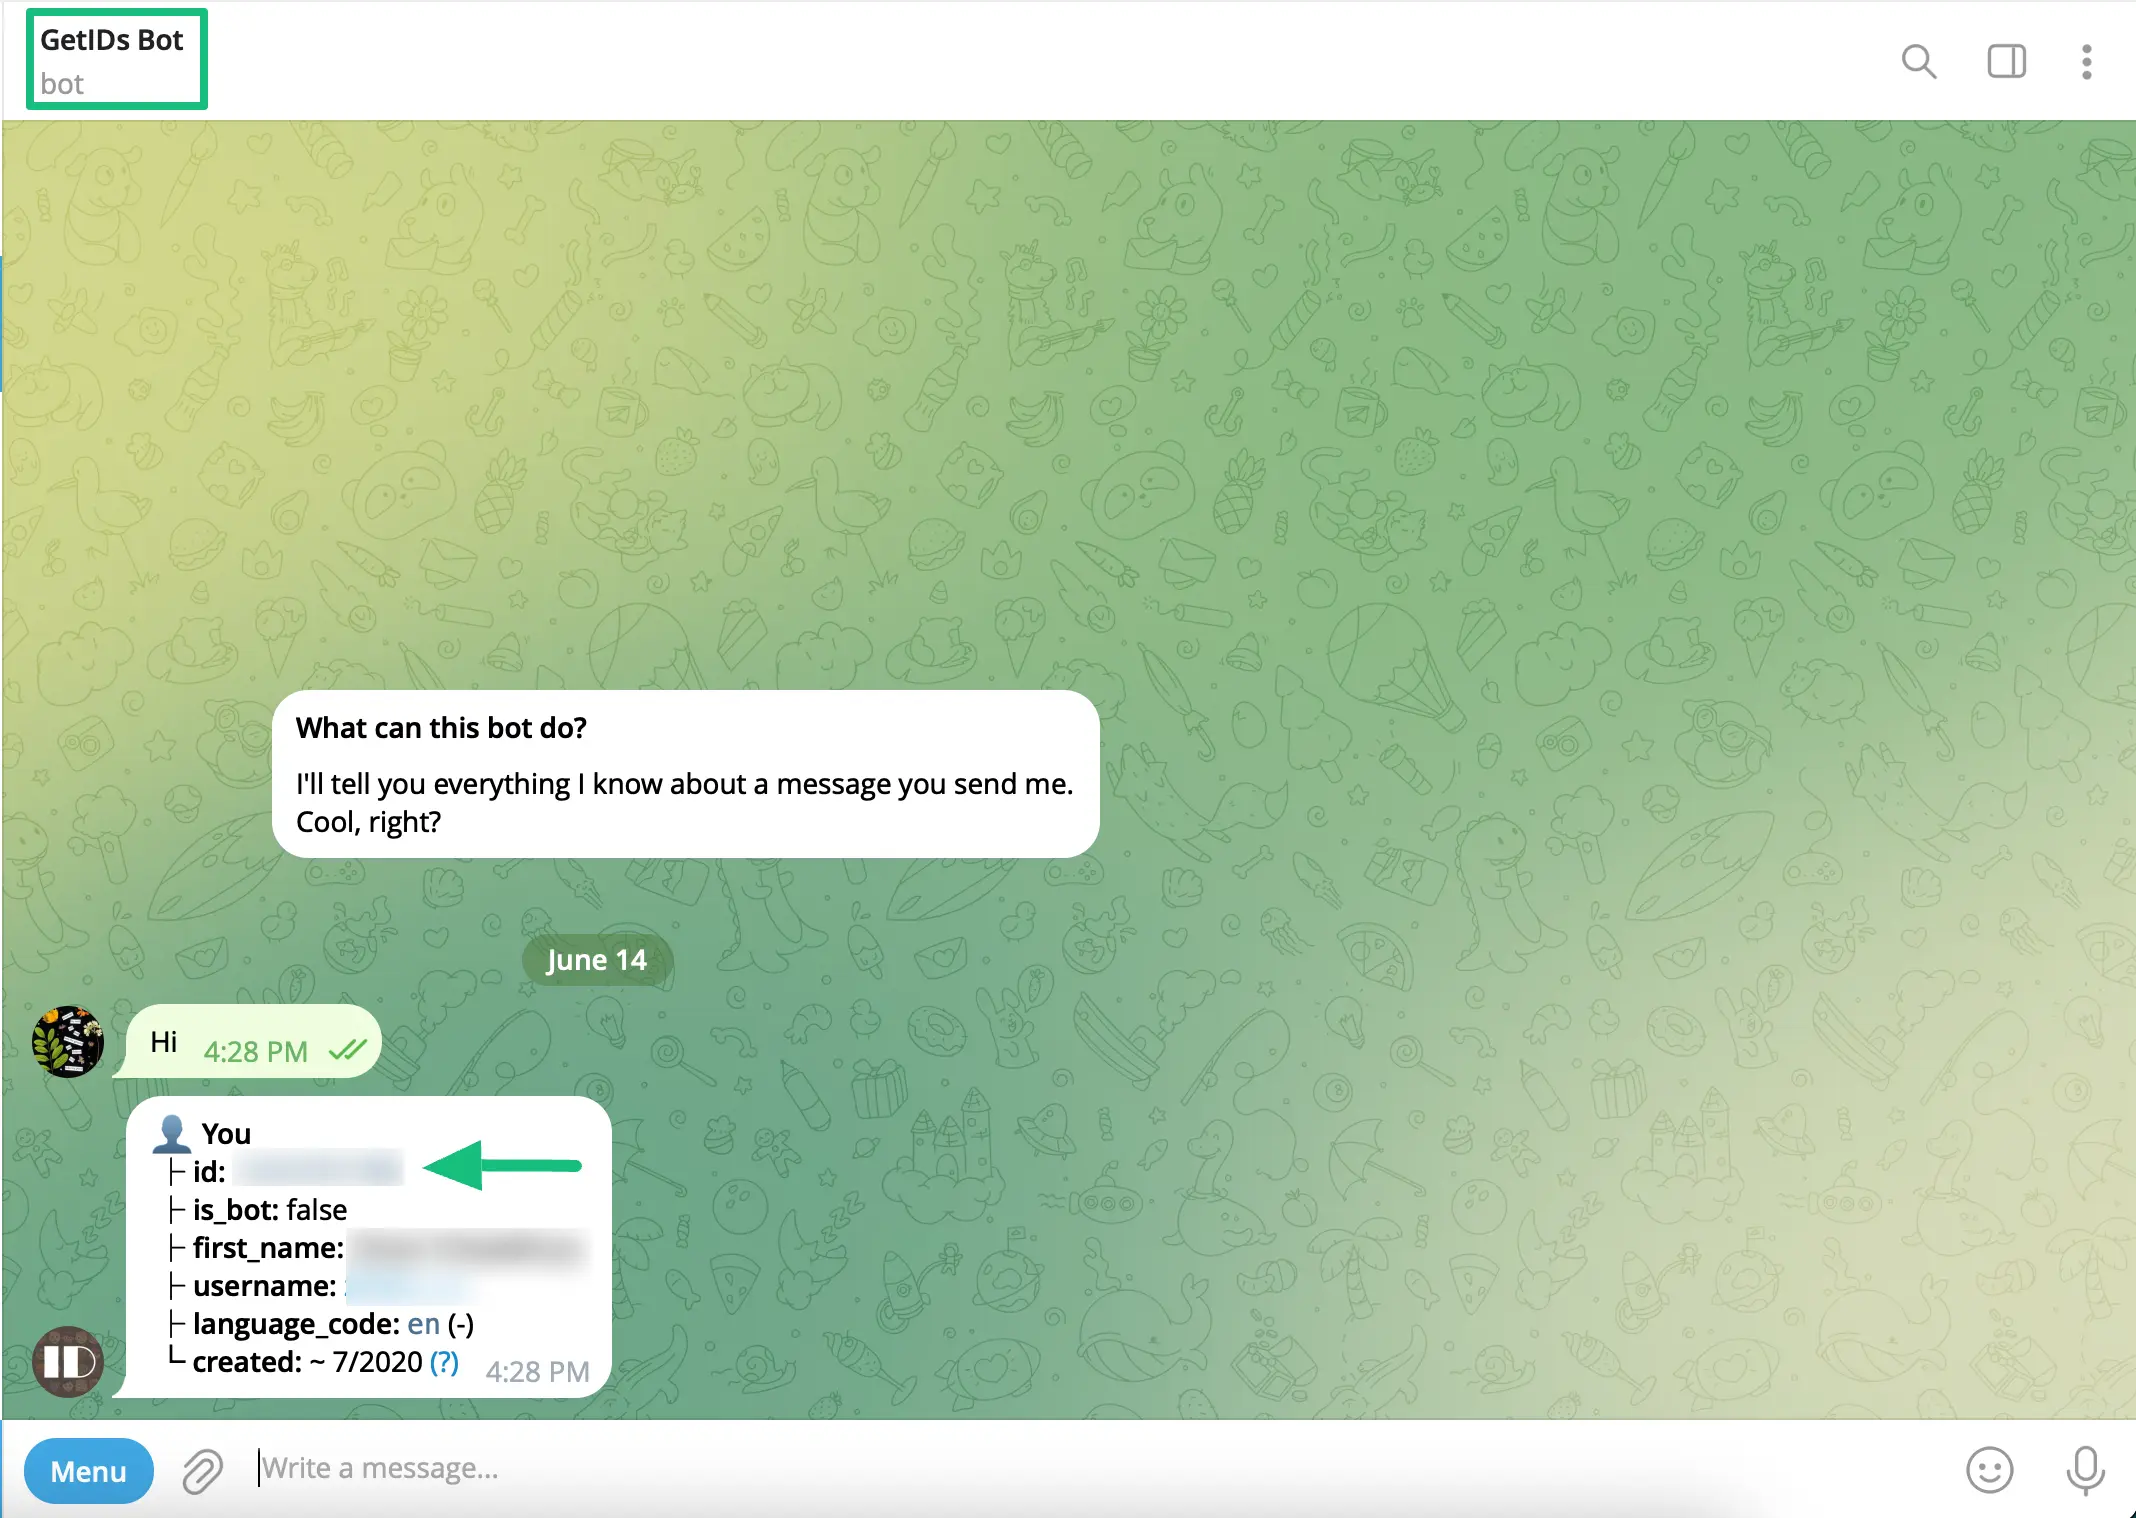 Get Telegram Chat ID from GetIDs Bot